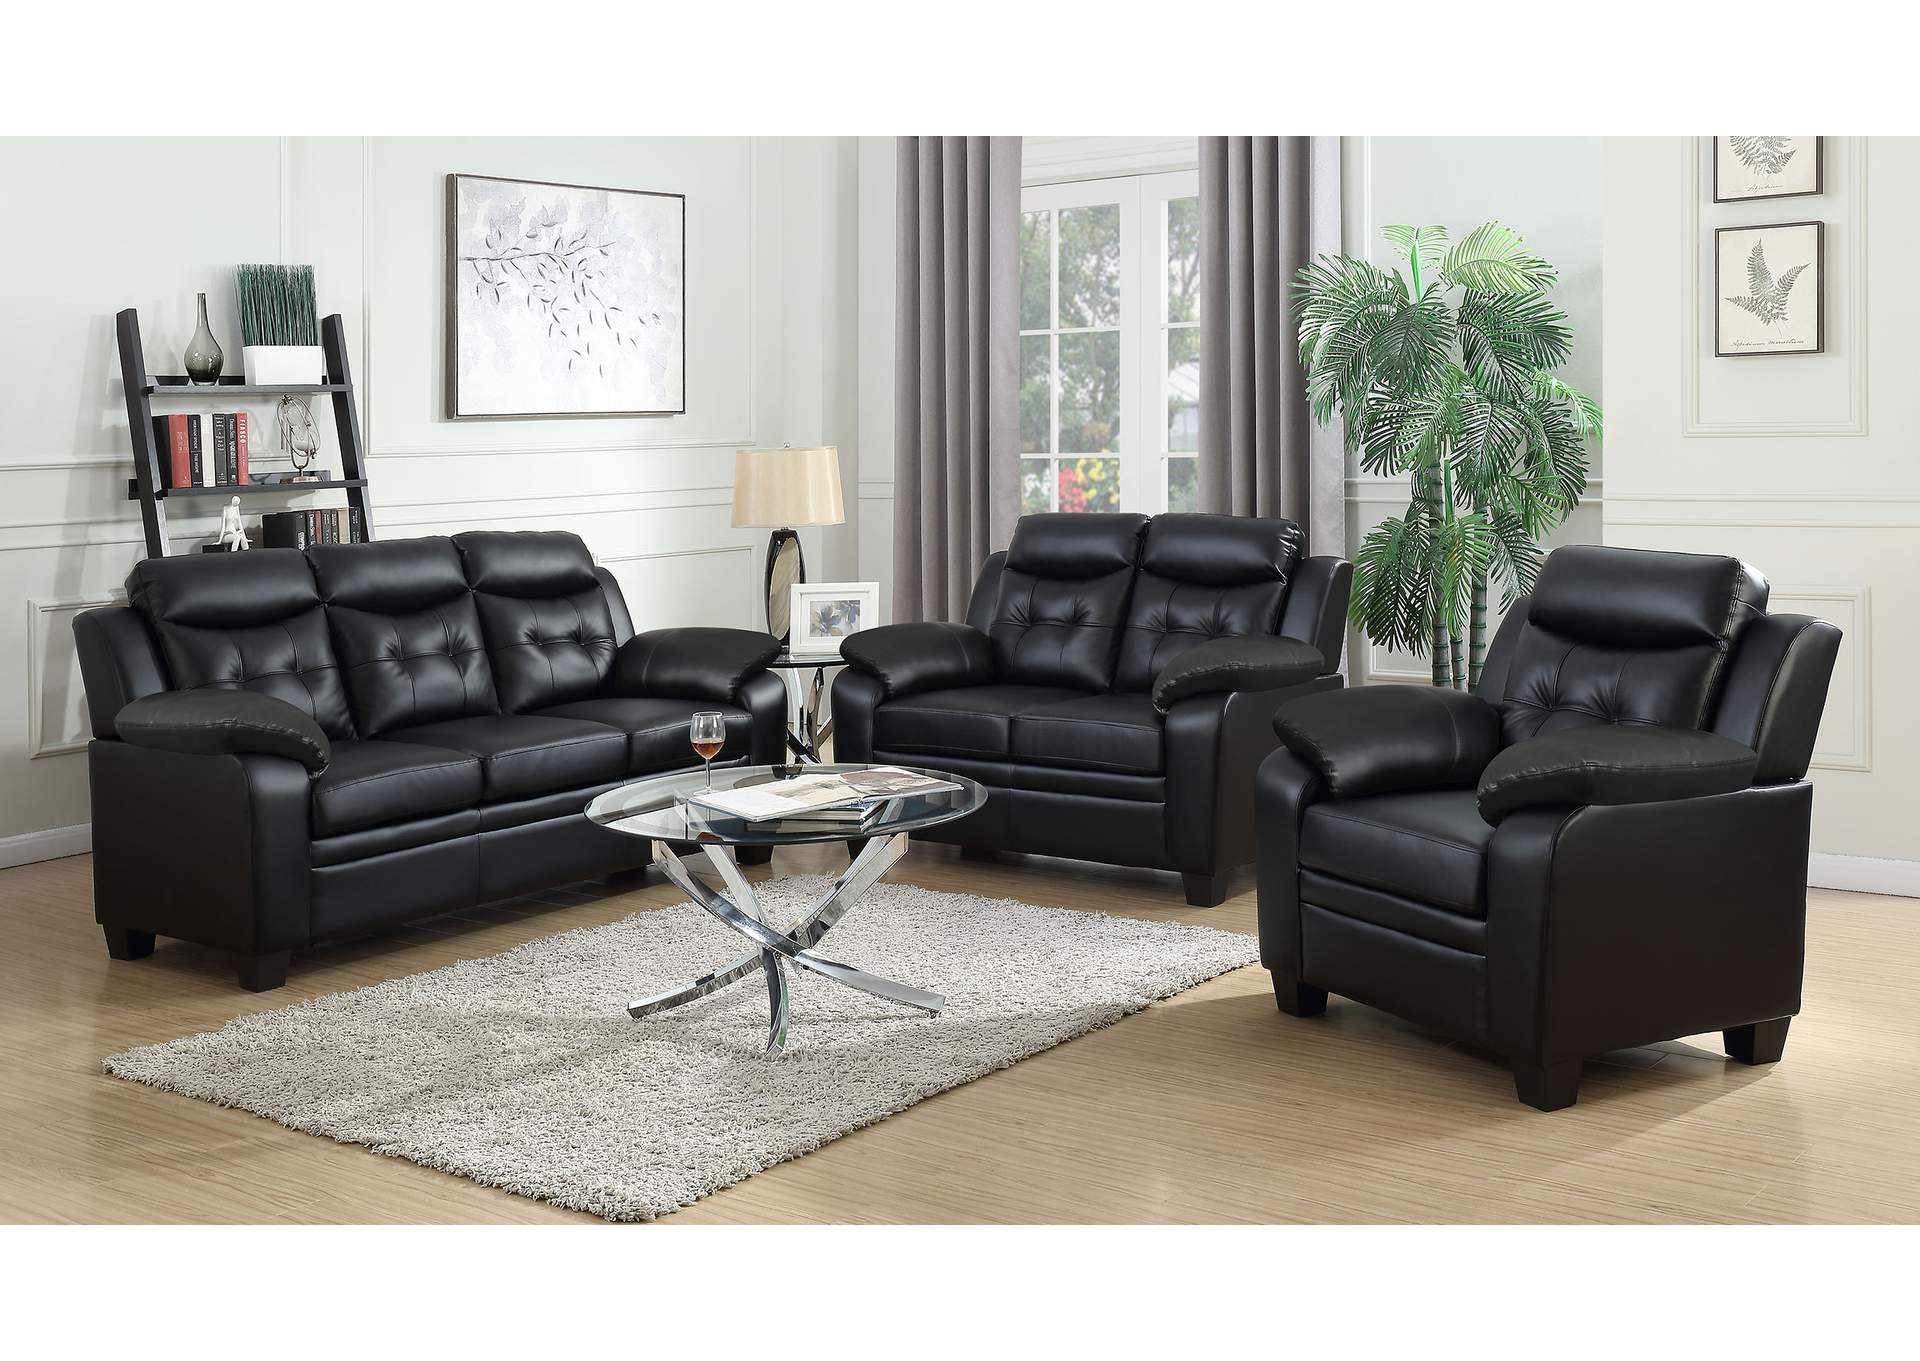 Finley Tufted Upholstered Loveseat Black,Coaster Furniture